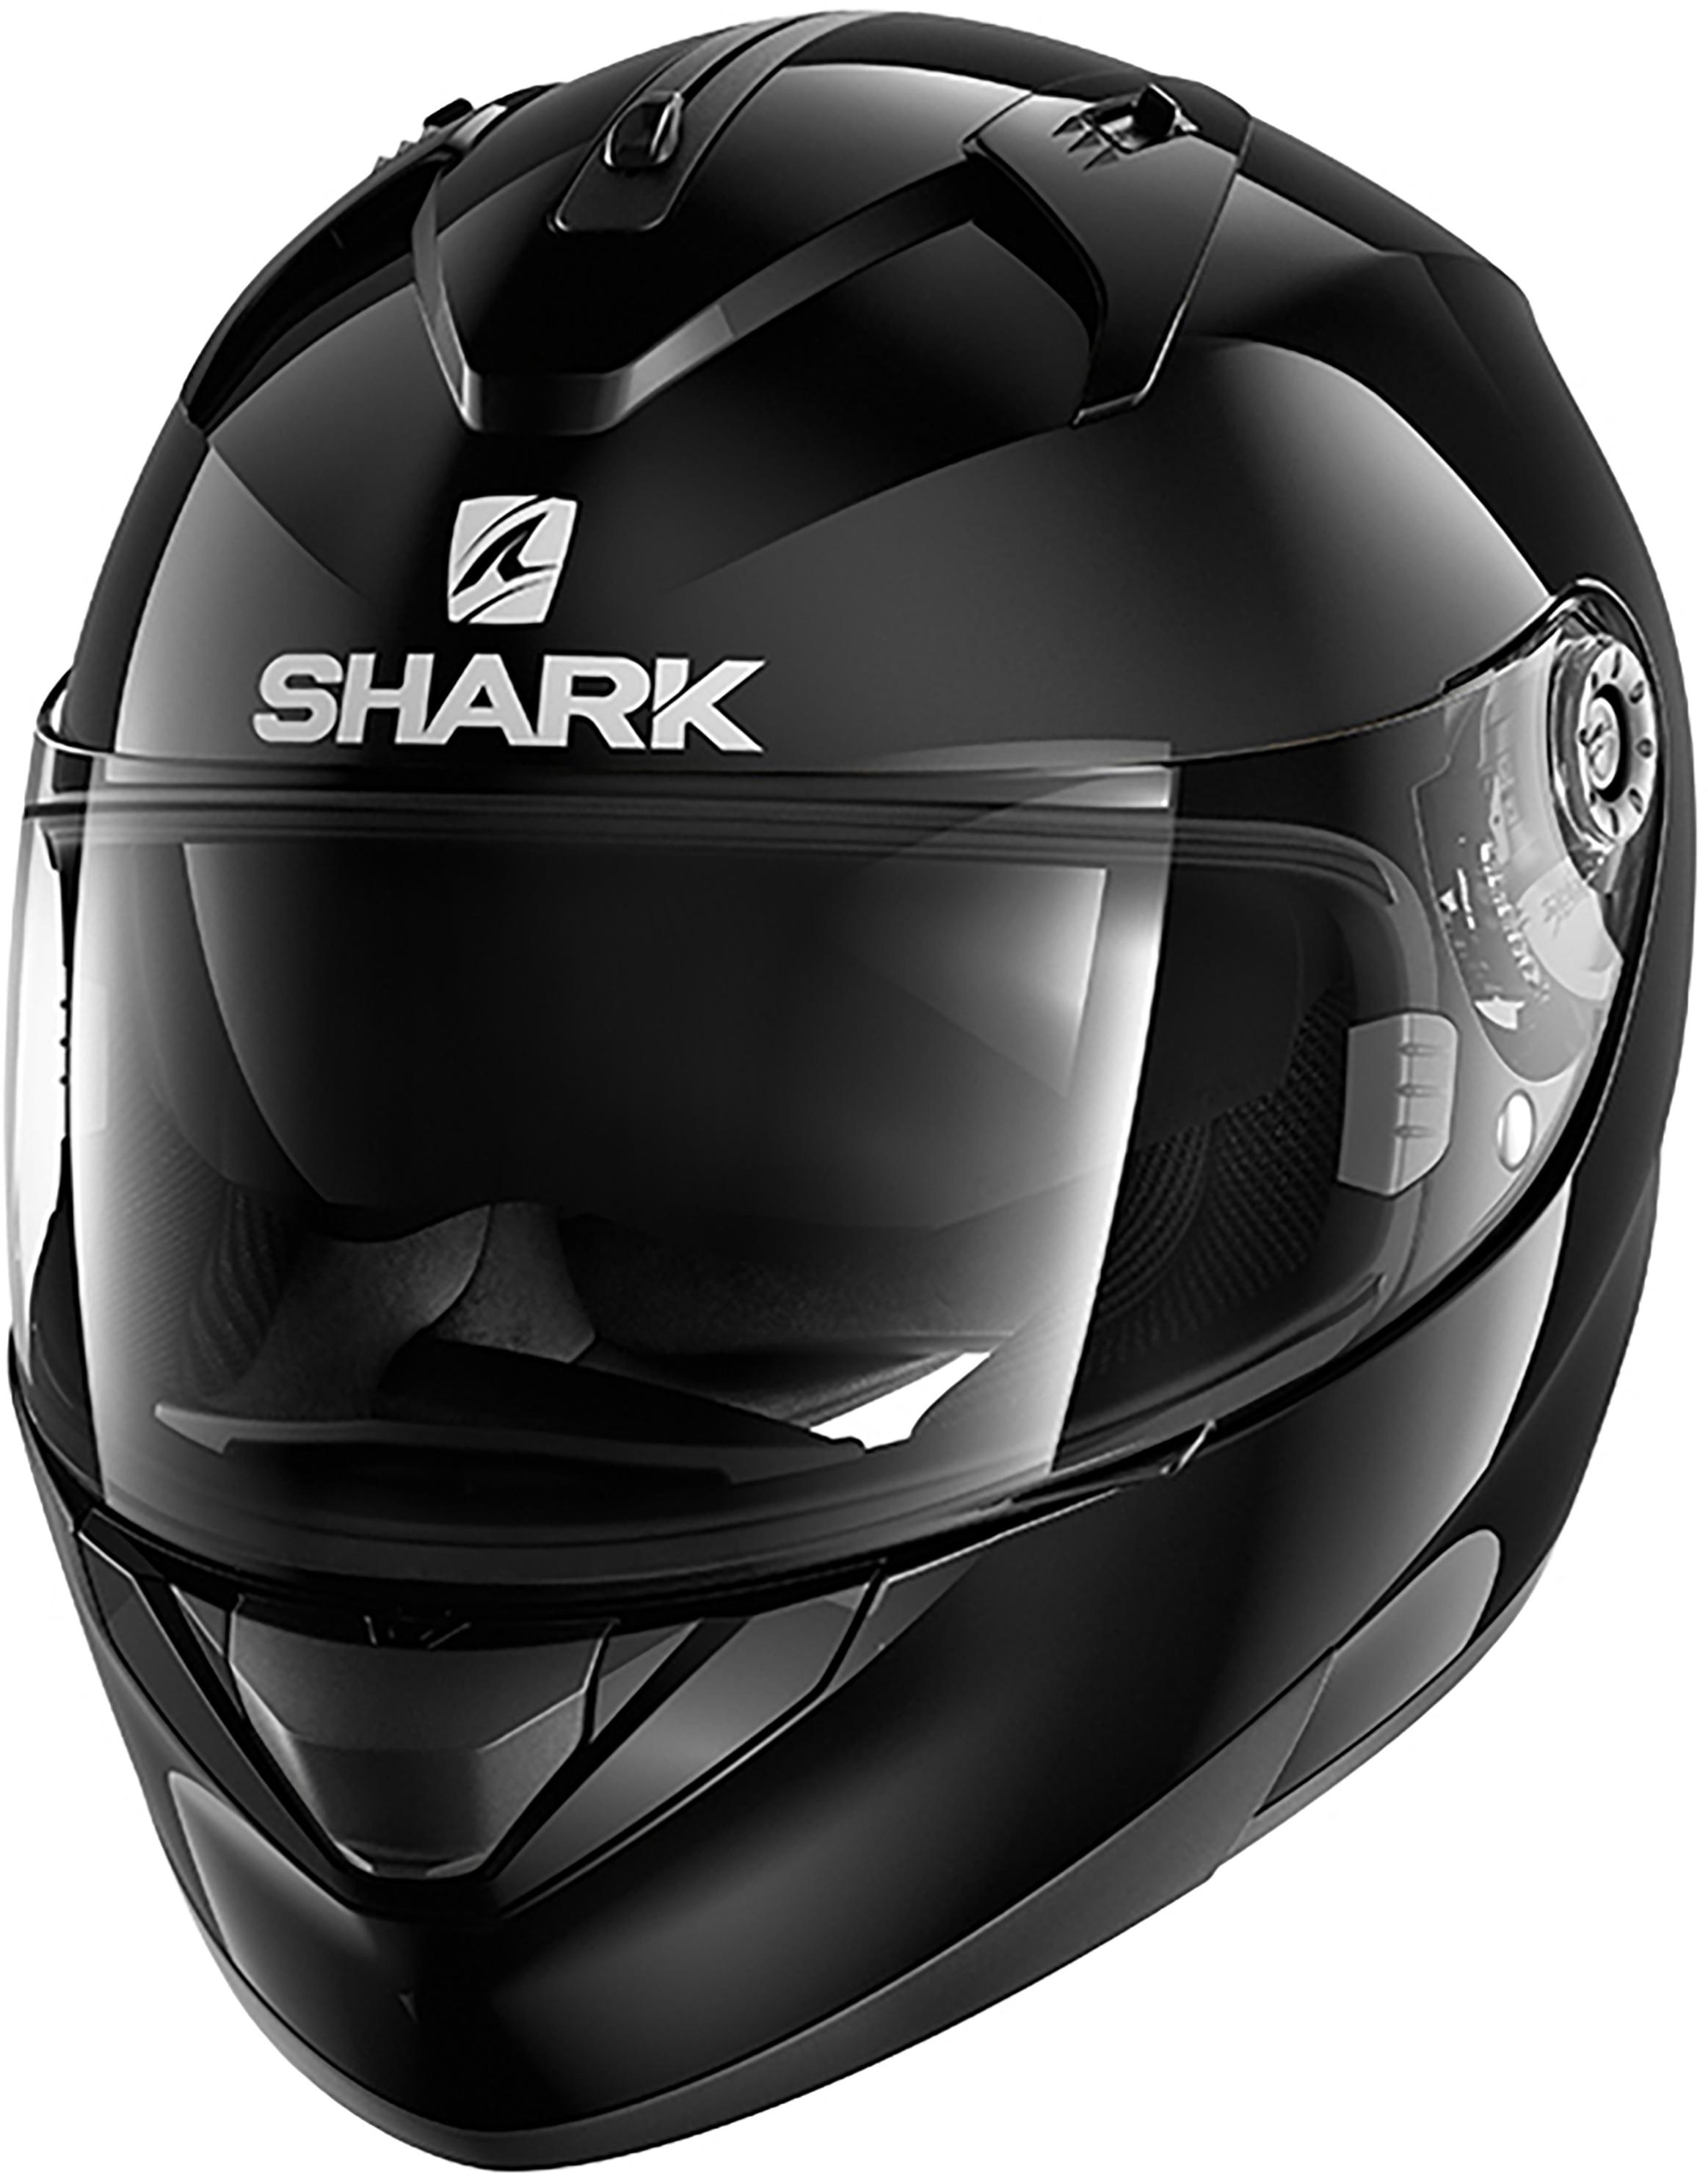 Shark Ridill Motorcycle Helmet - Large